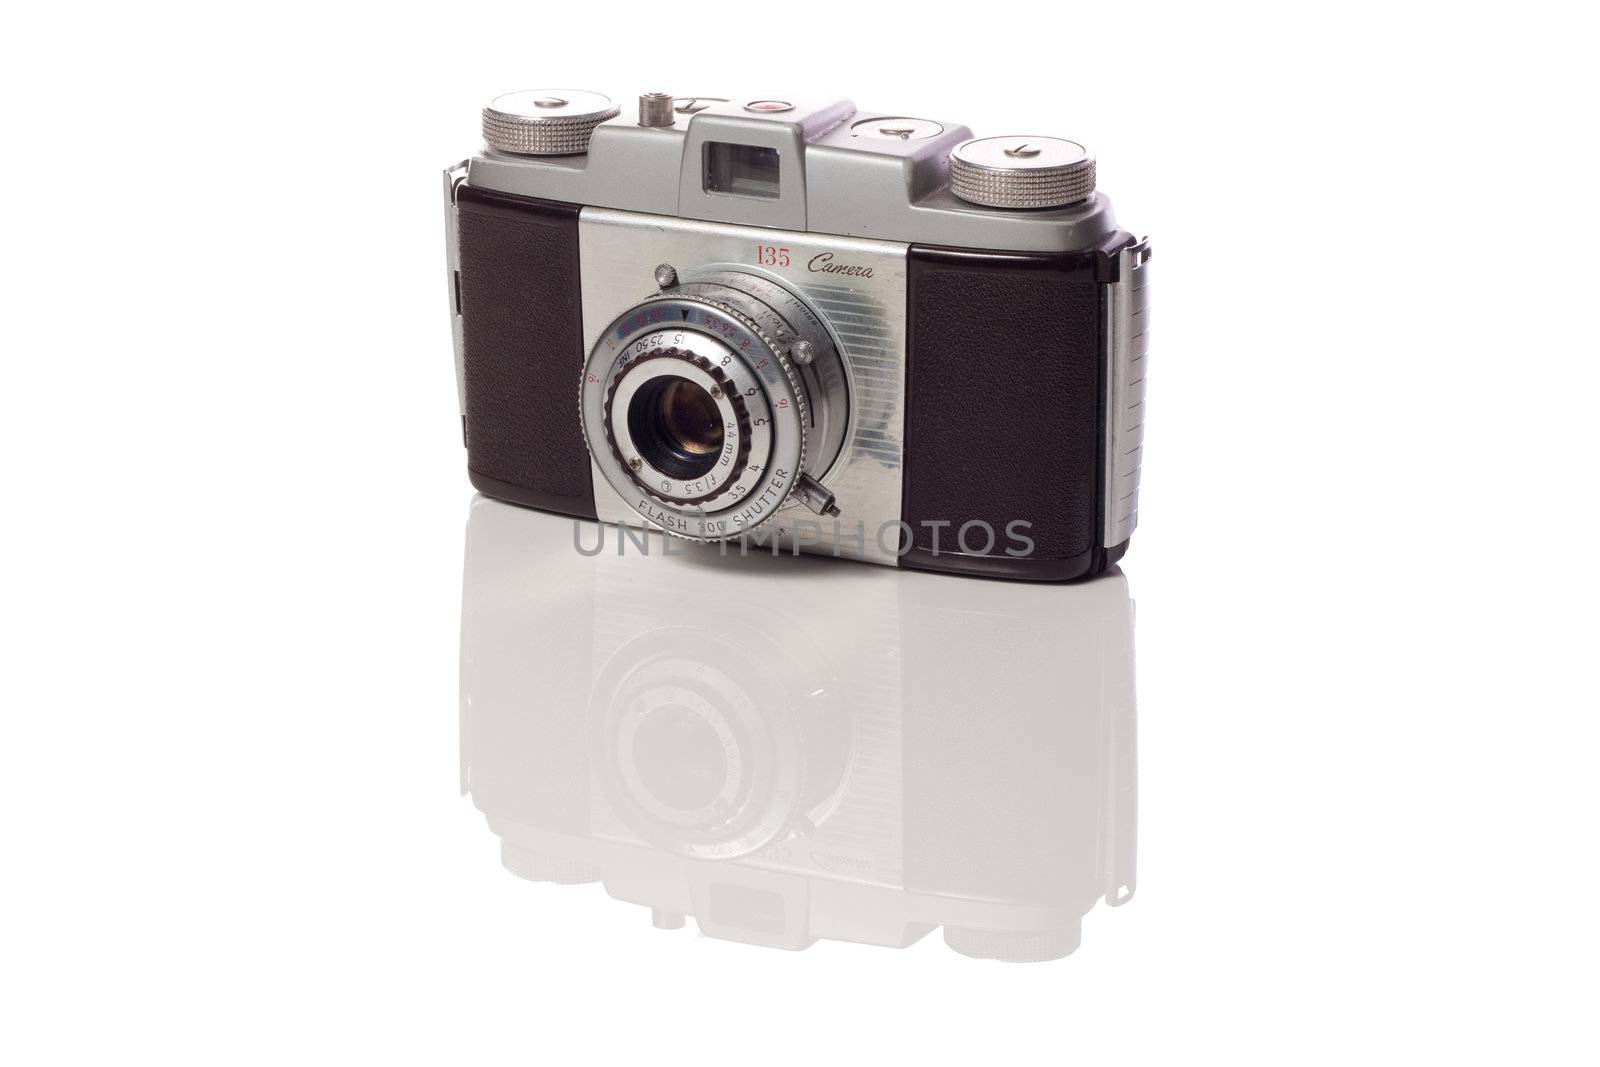 Very old 135 film camera